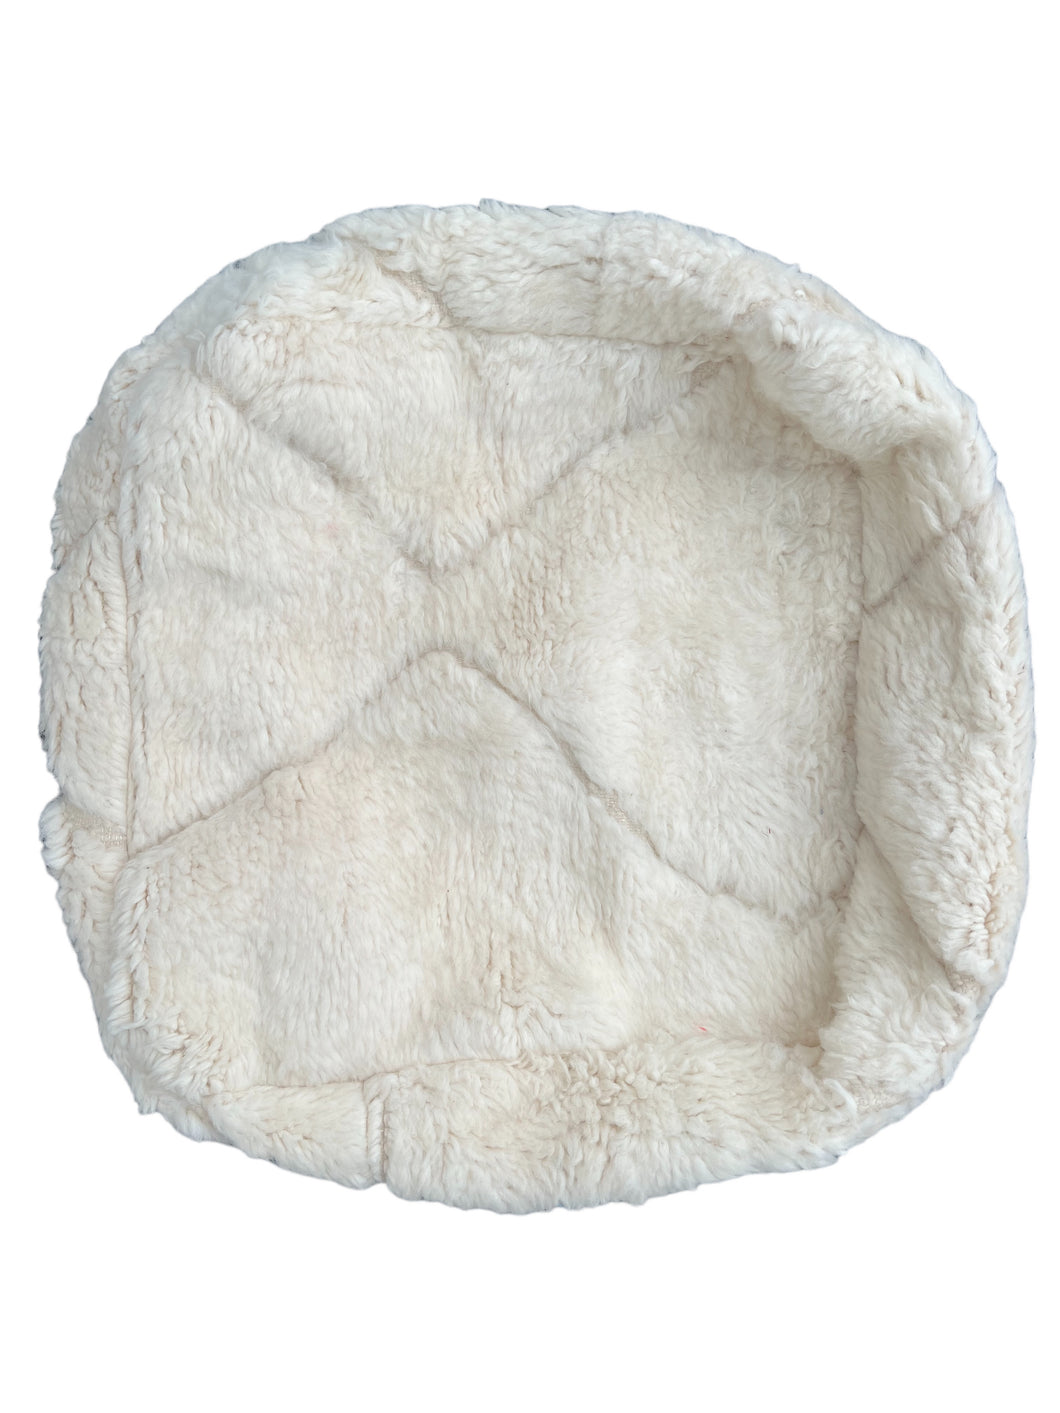 Moroccan Floor Cushion - Natural Wool No. 10